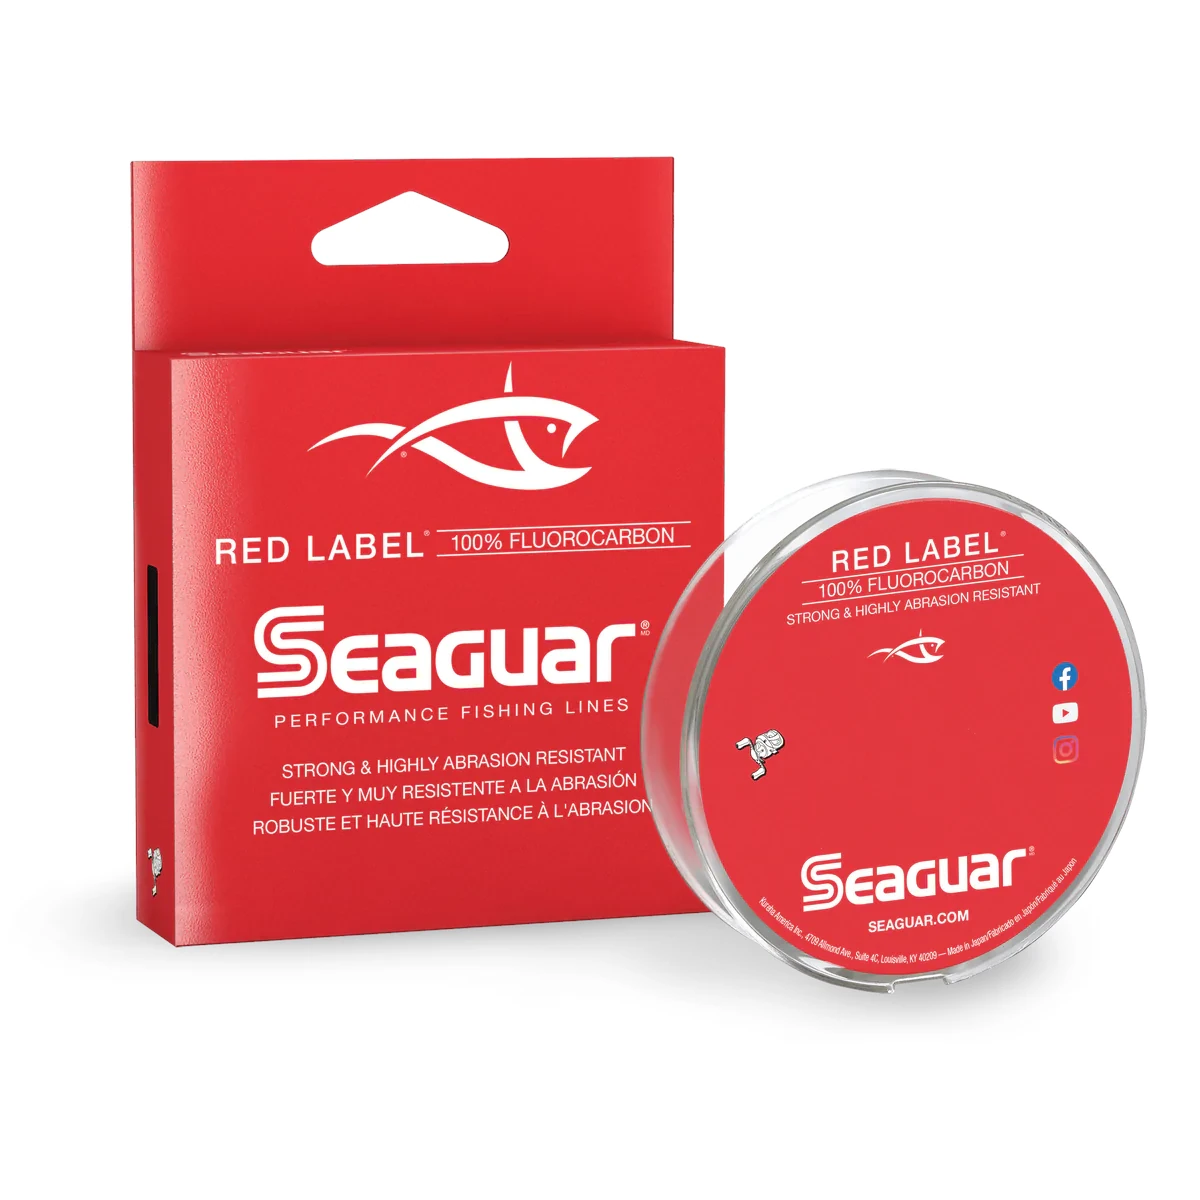 Seaguar Red Label Fluorocarbon Line - Bait Finesse Empire